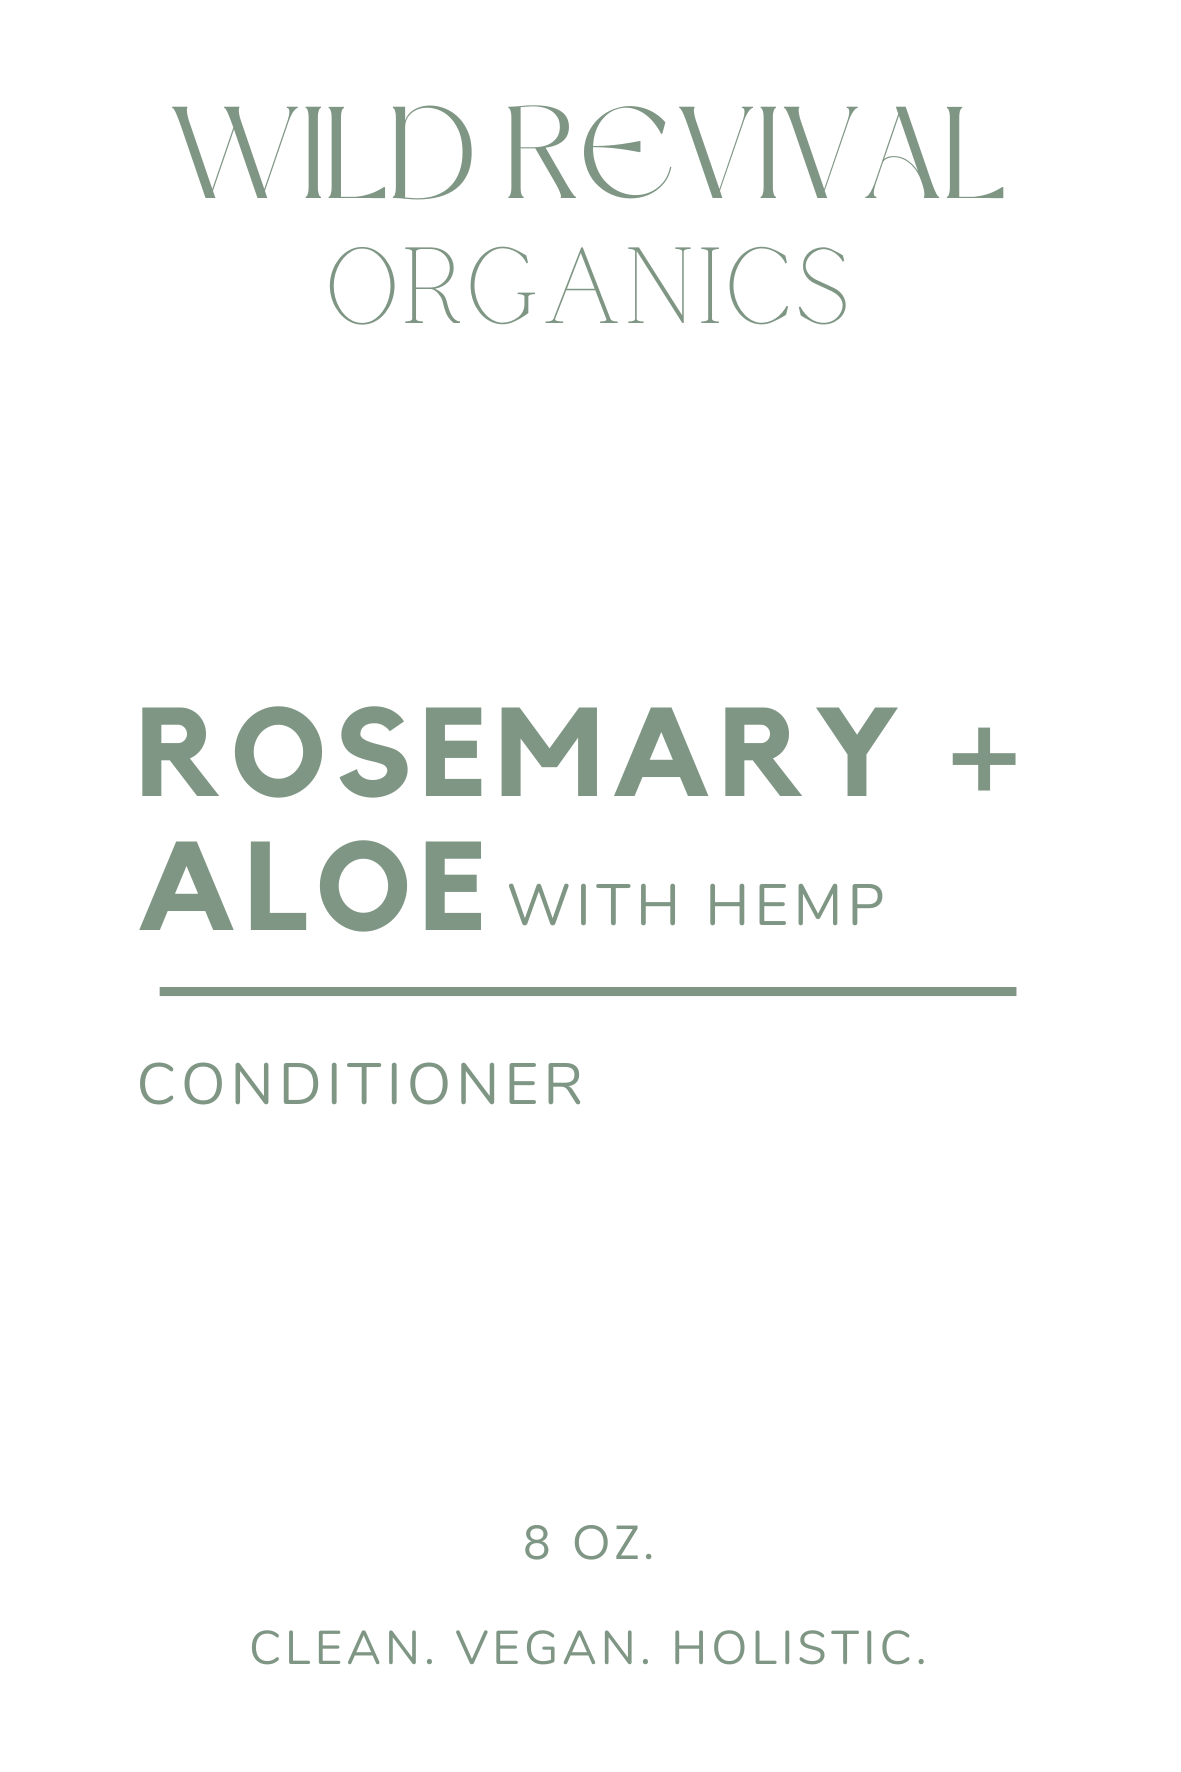 *NEW* ROSEMARY + ALOE with Hemp - 8oz. Conditioner - Wild Revival Organics